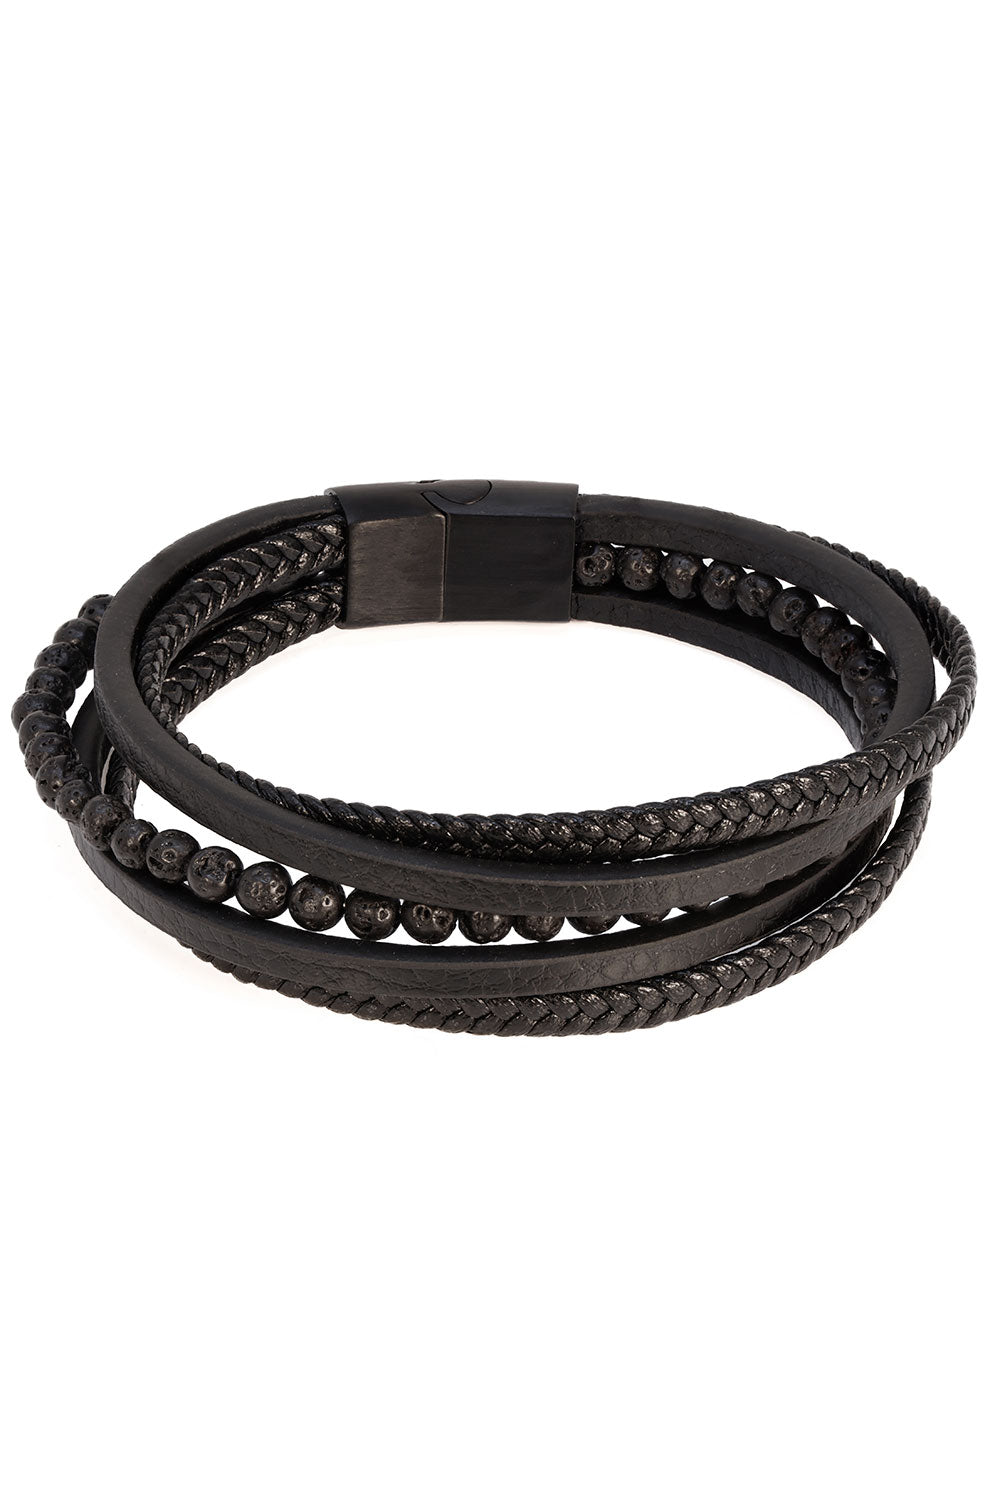 Barabas Unisex Beaded Multi-Layer Leather Magnetic Bracelets 4BMS08 Black Black